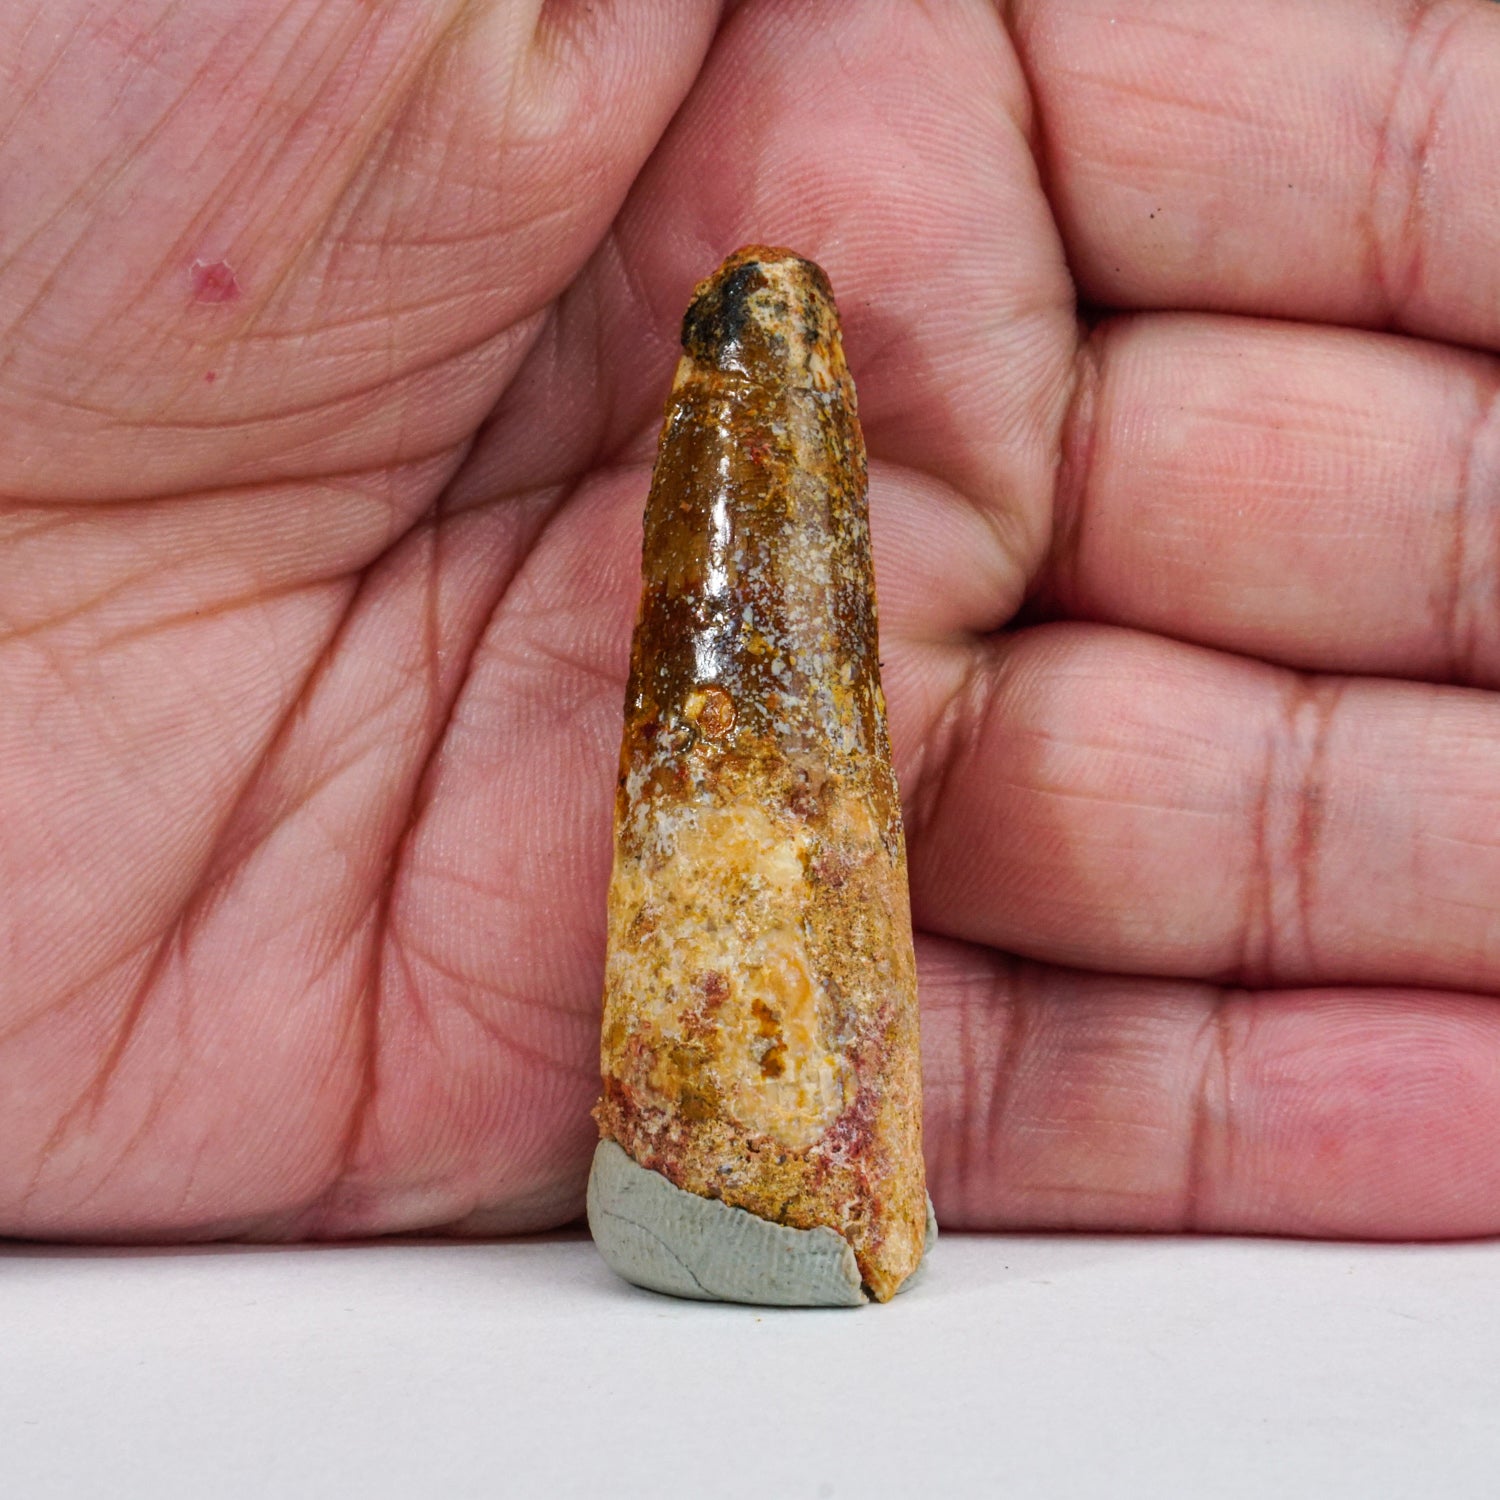 Genuine Carcharodontosaurus Tooth in Display Box (11 grams)